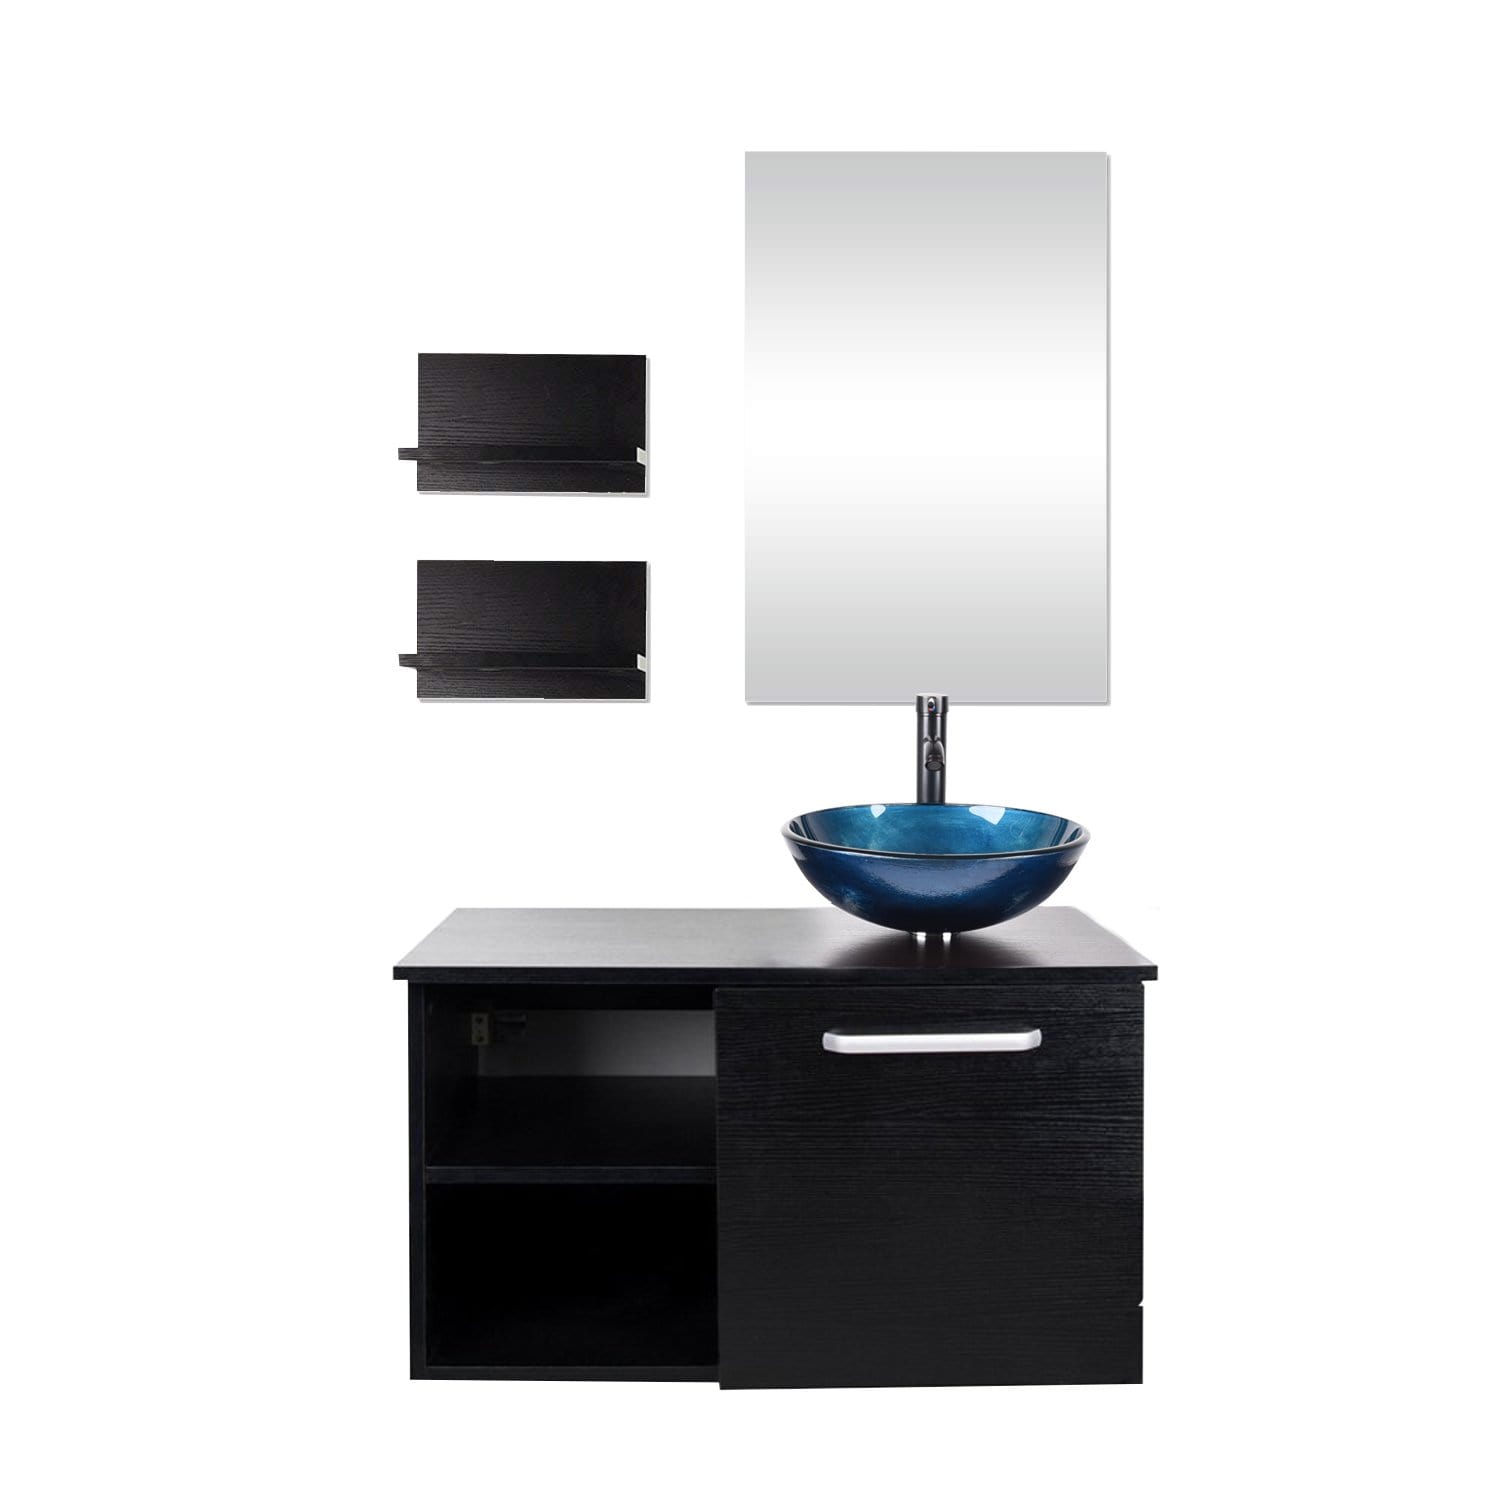 Wall-mounted Vanity Set, Modern Design